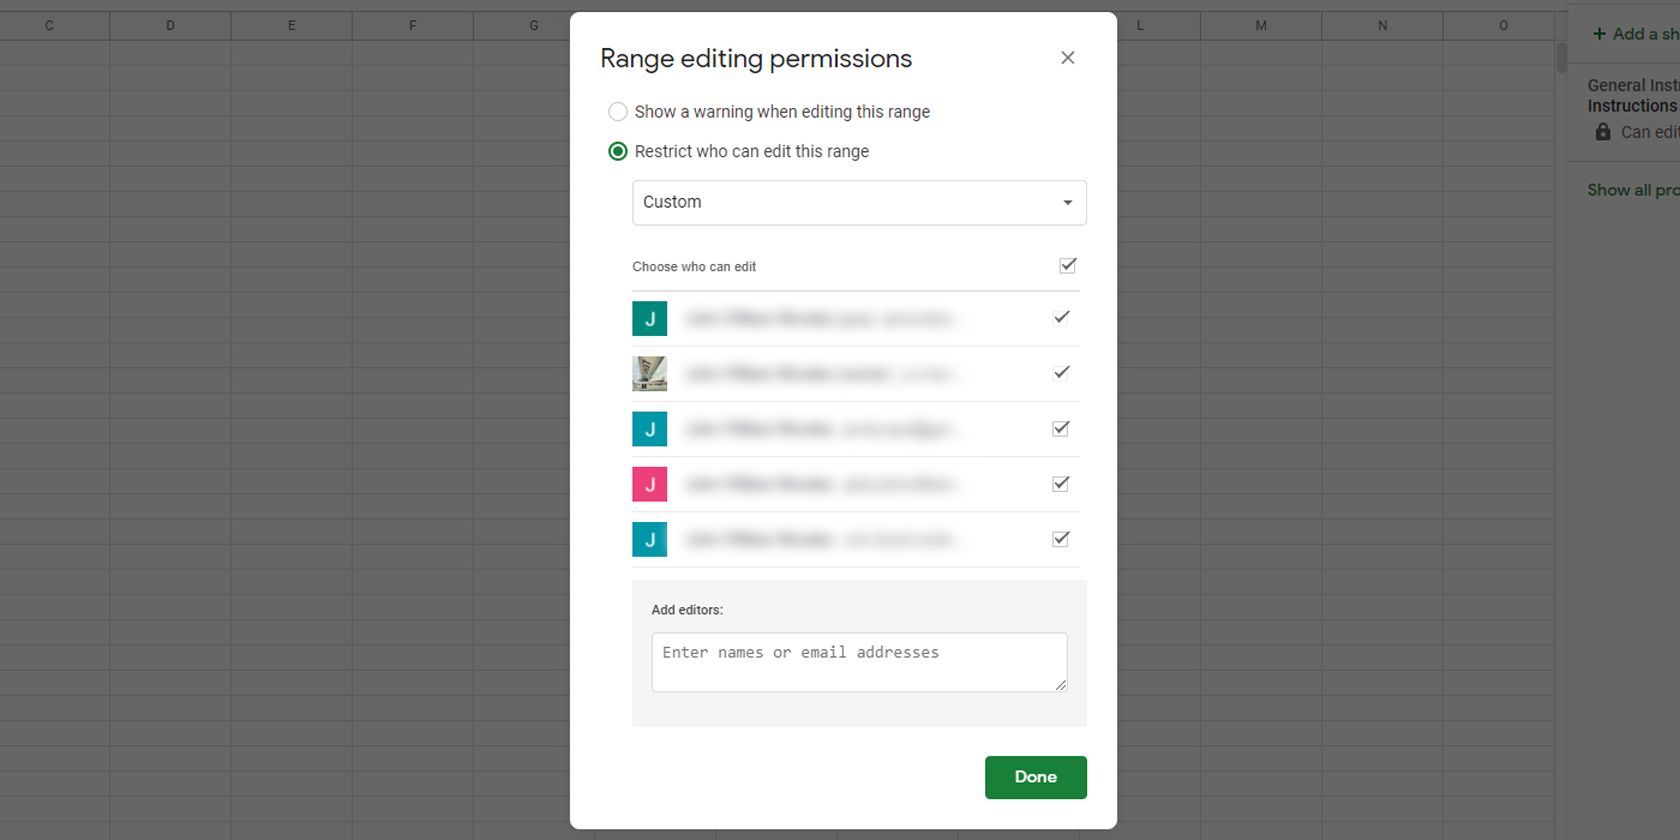 Range editing permissions on Google Sheets